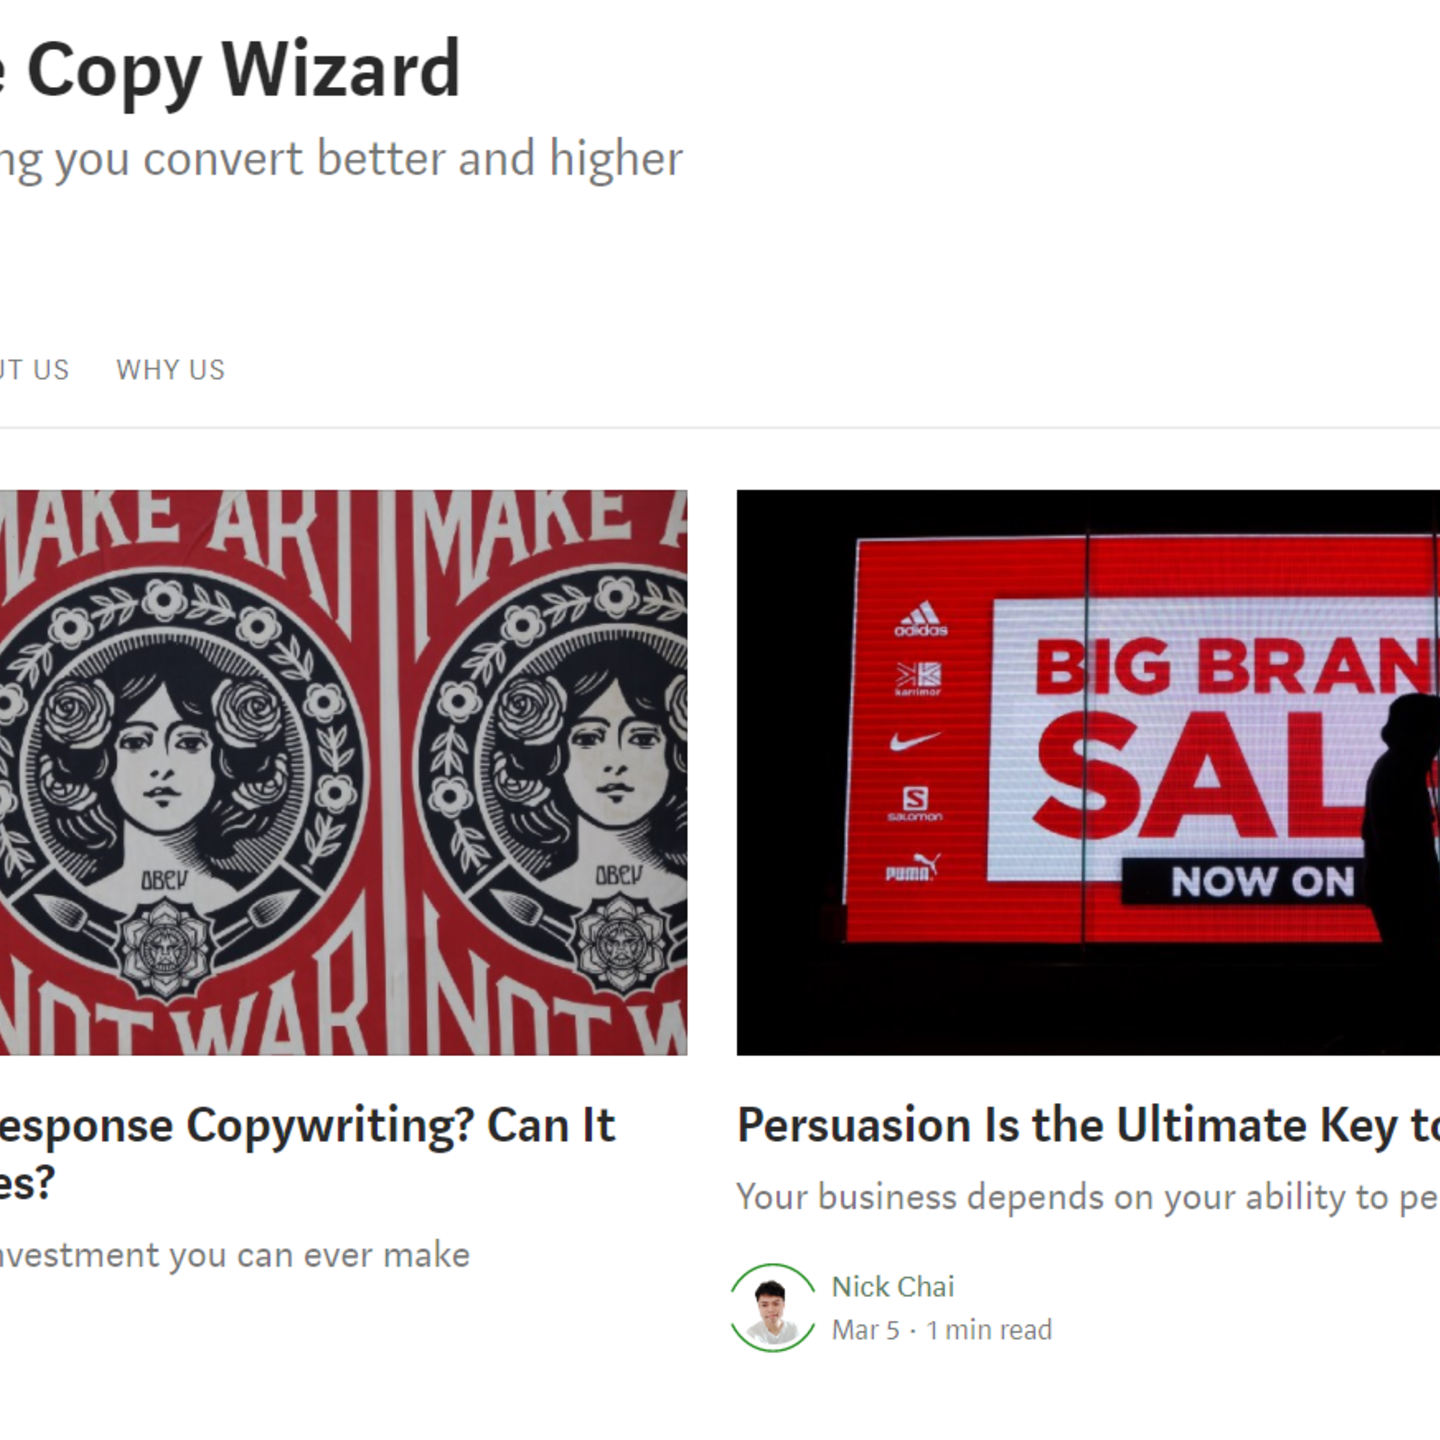 Medium Publication - The Copy Wizard